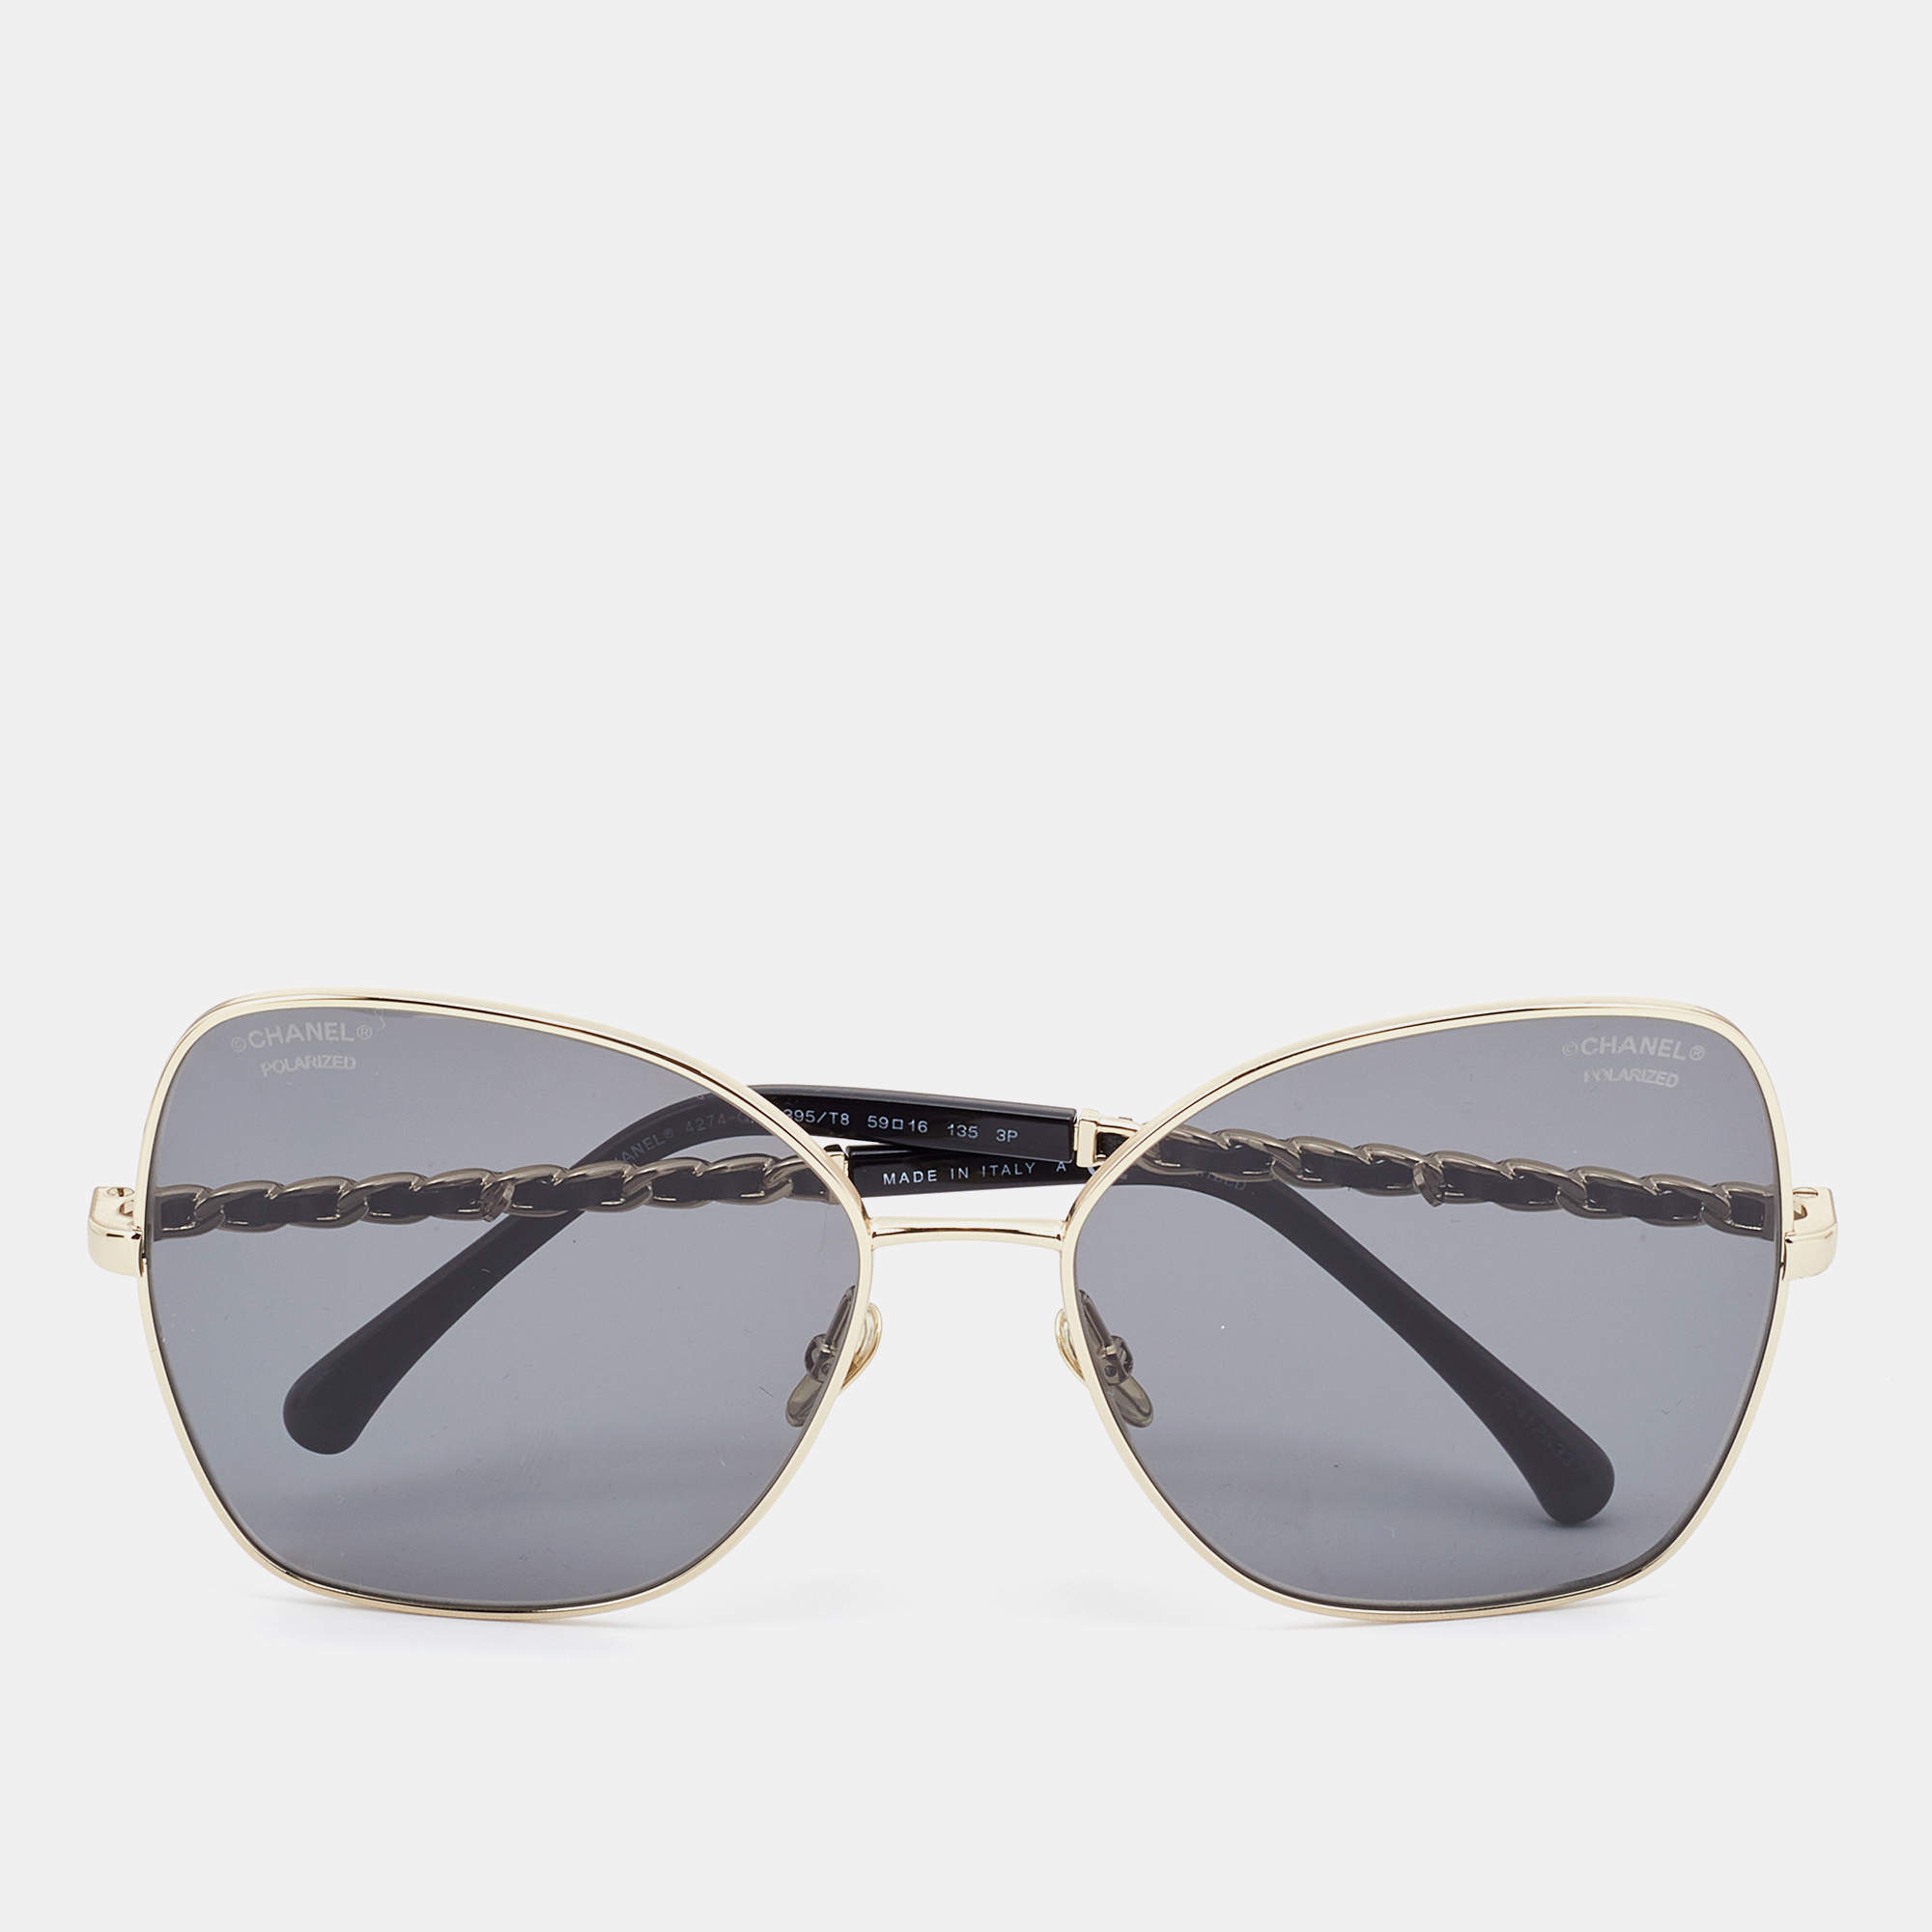 Butterfly Sunglasses - Sunglasses